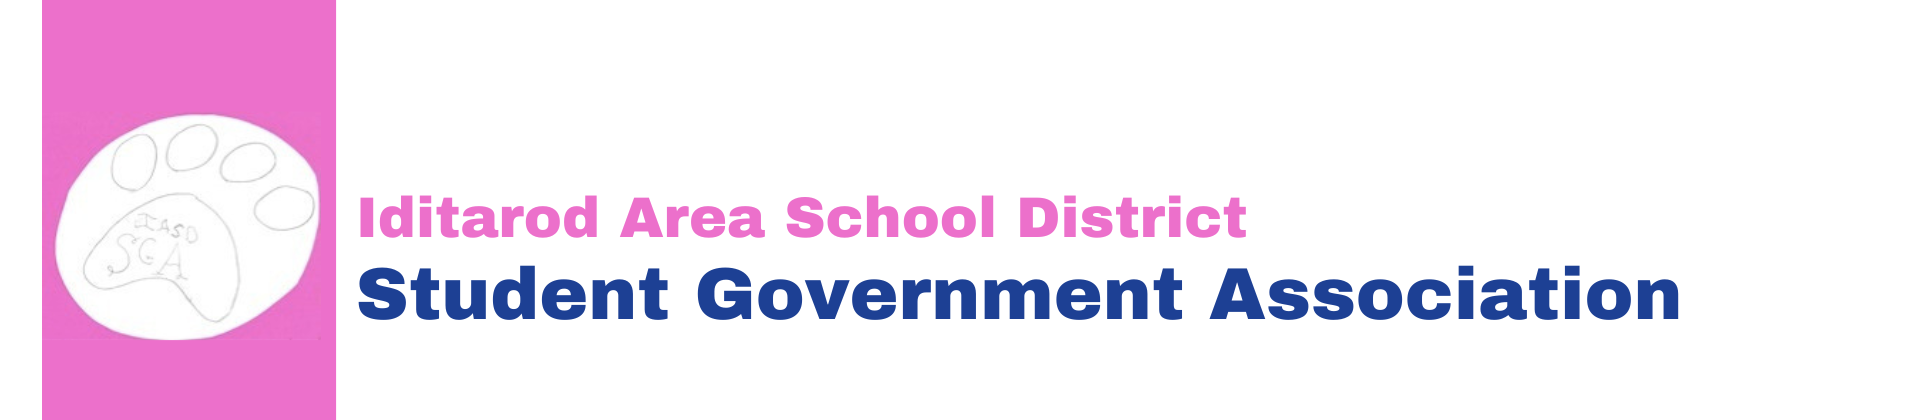 Iditarod Area School District Student Government Association logo